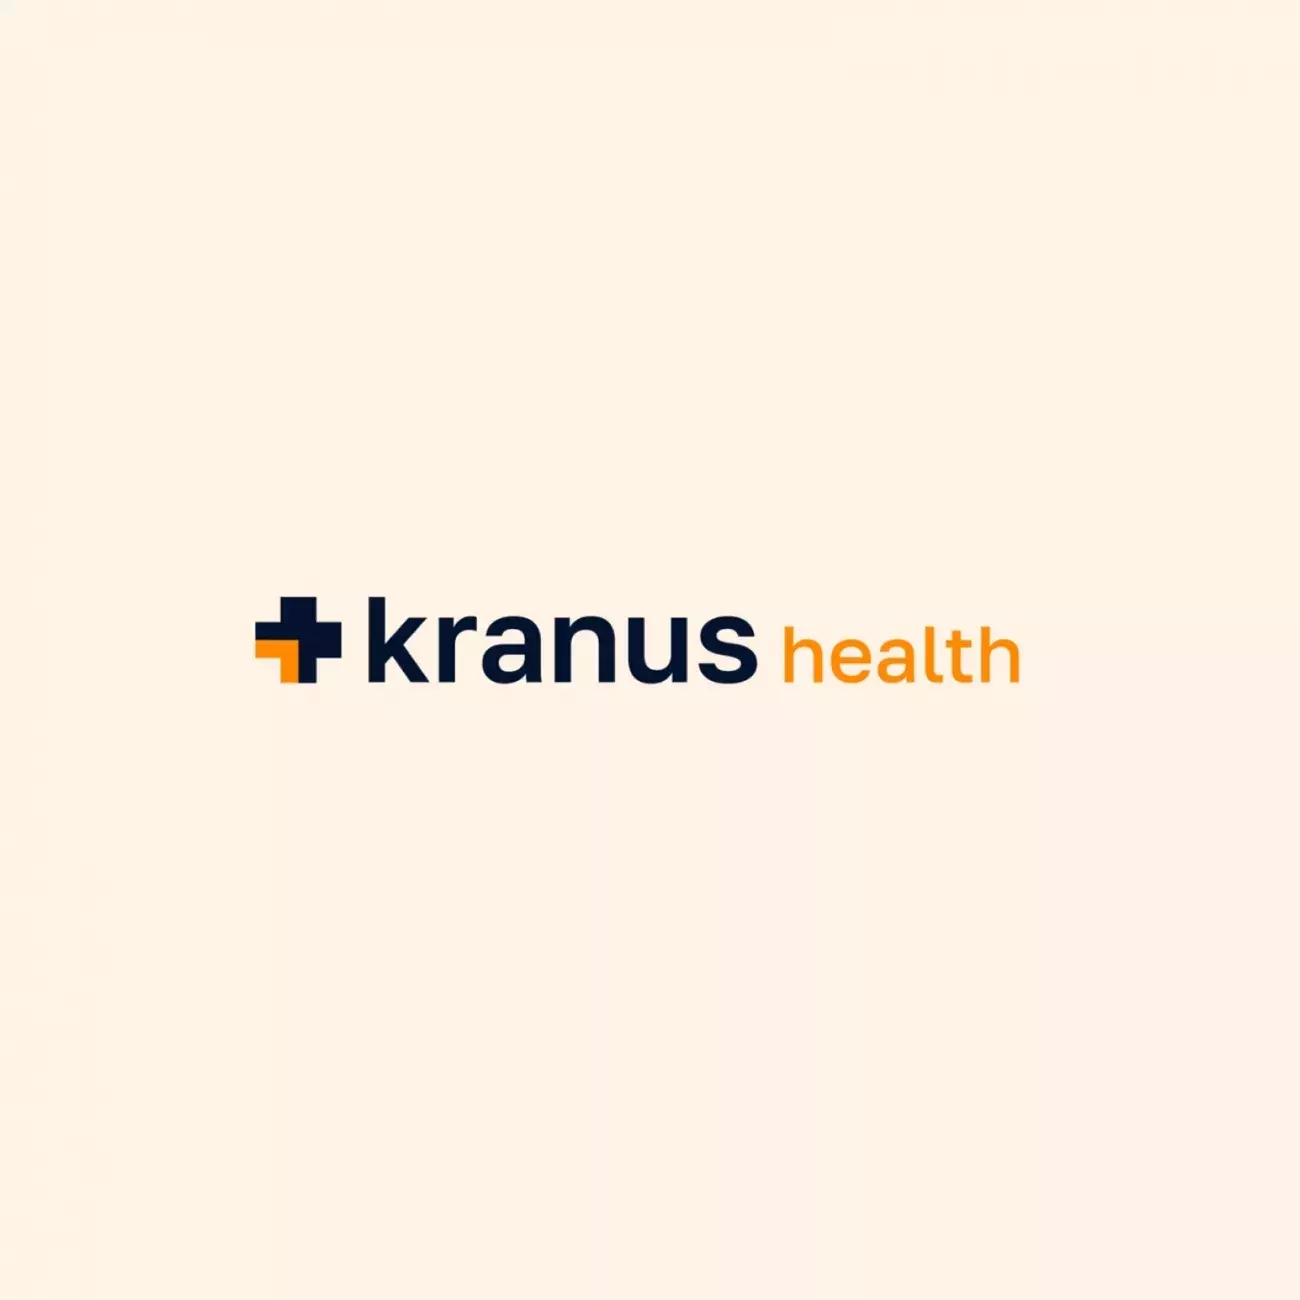 Kranus Health branding and visual identity 